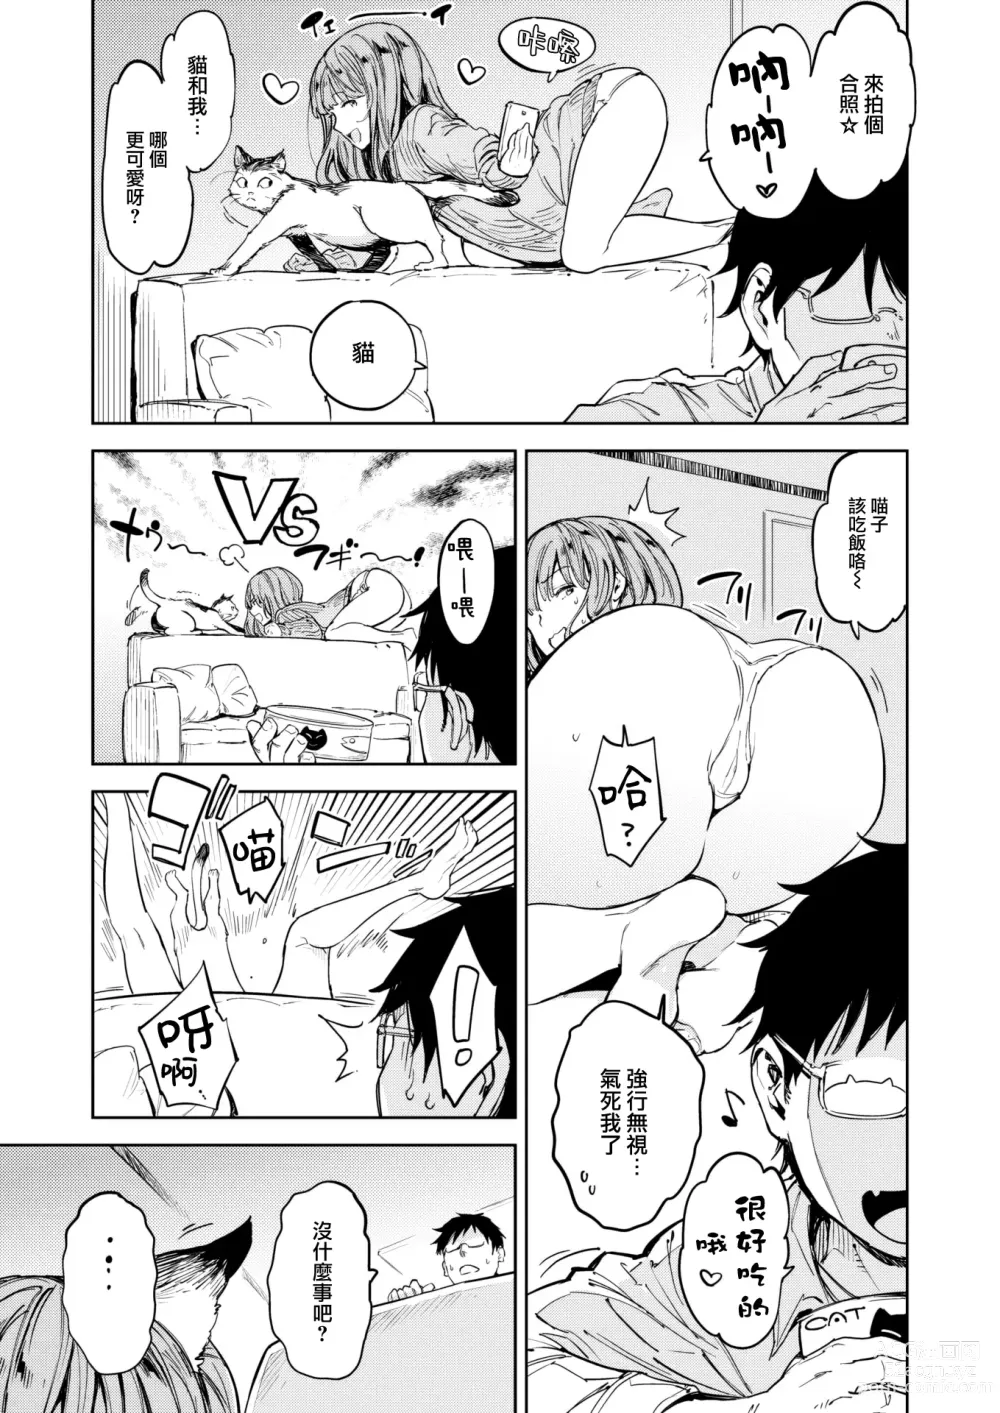 Page 4 of manga Gal Neko